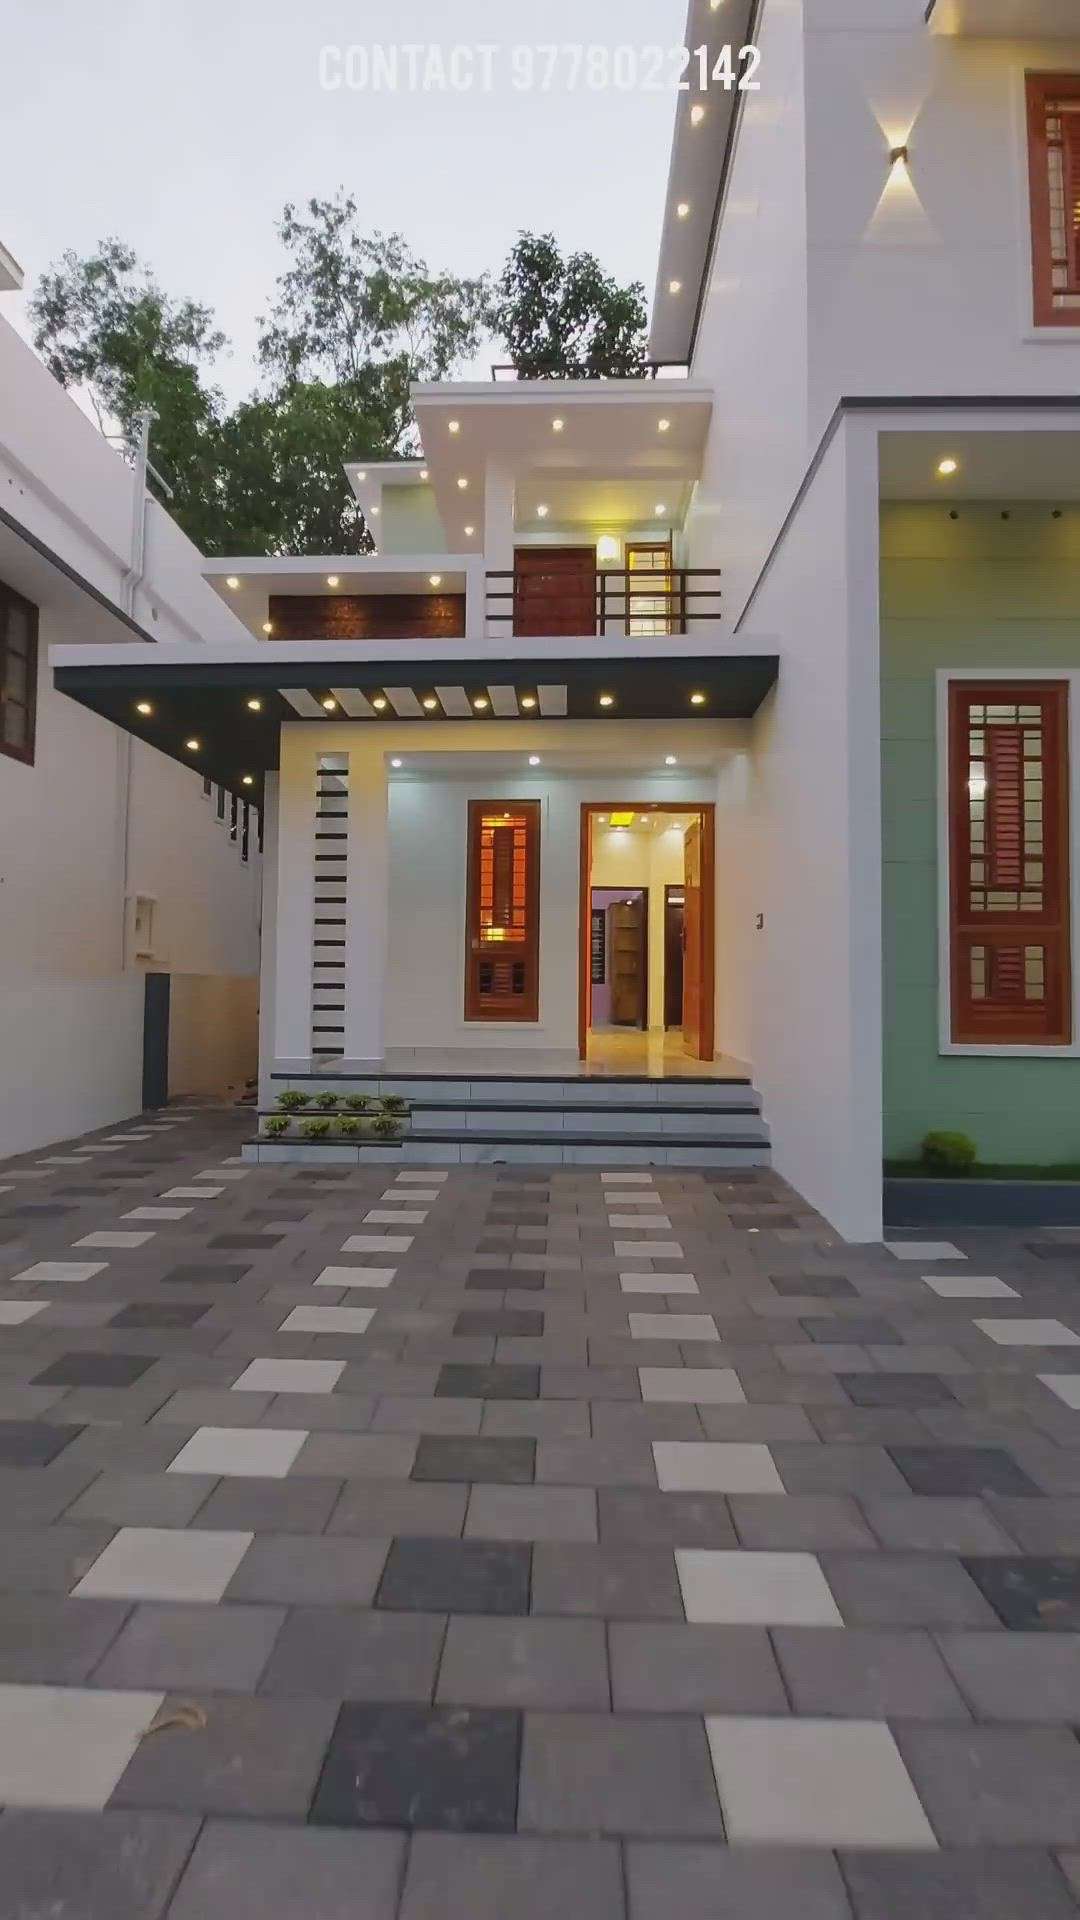 KERALA house for sale in trivandrum kerala 58 lakh malayinkeezhu machel

#home #keralastyle #KeralaStyleHouse #keralahomestyle